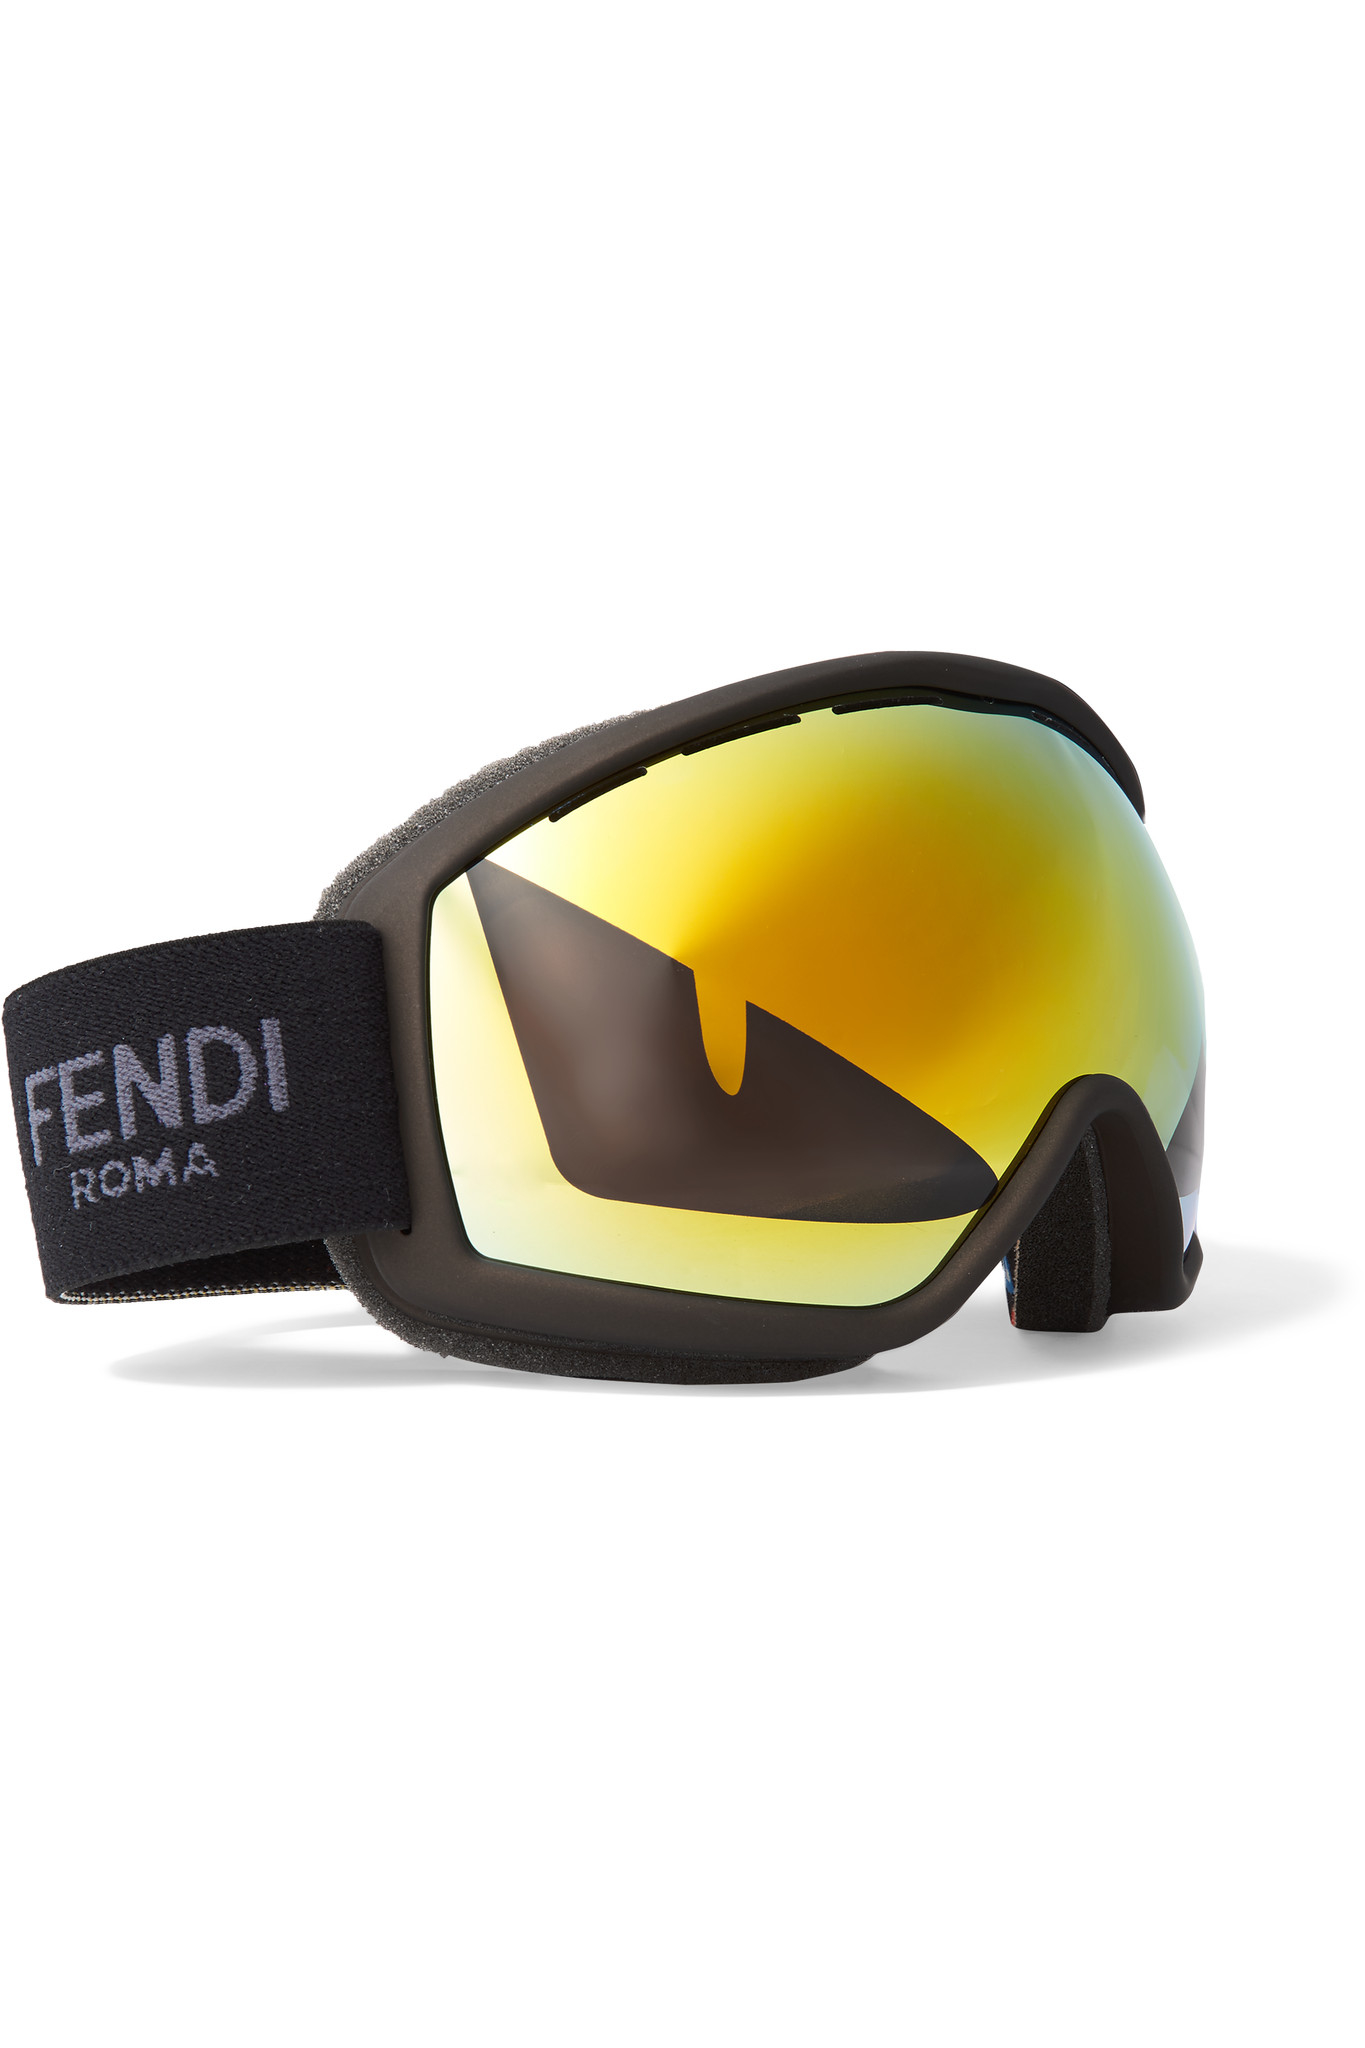 Fendi Synthetic Mirrored Ski Goggles in 